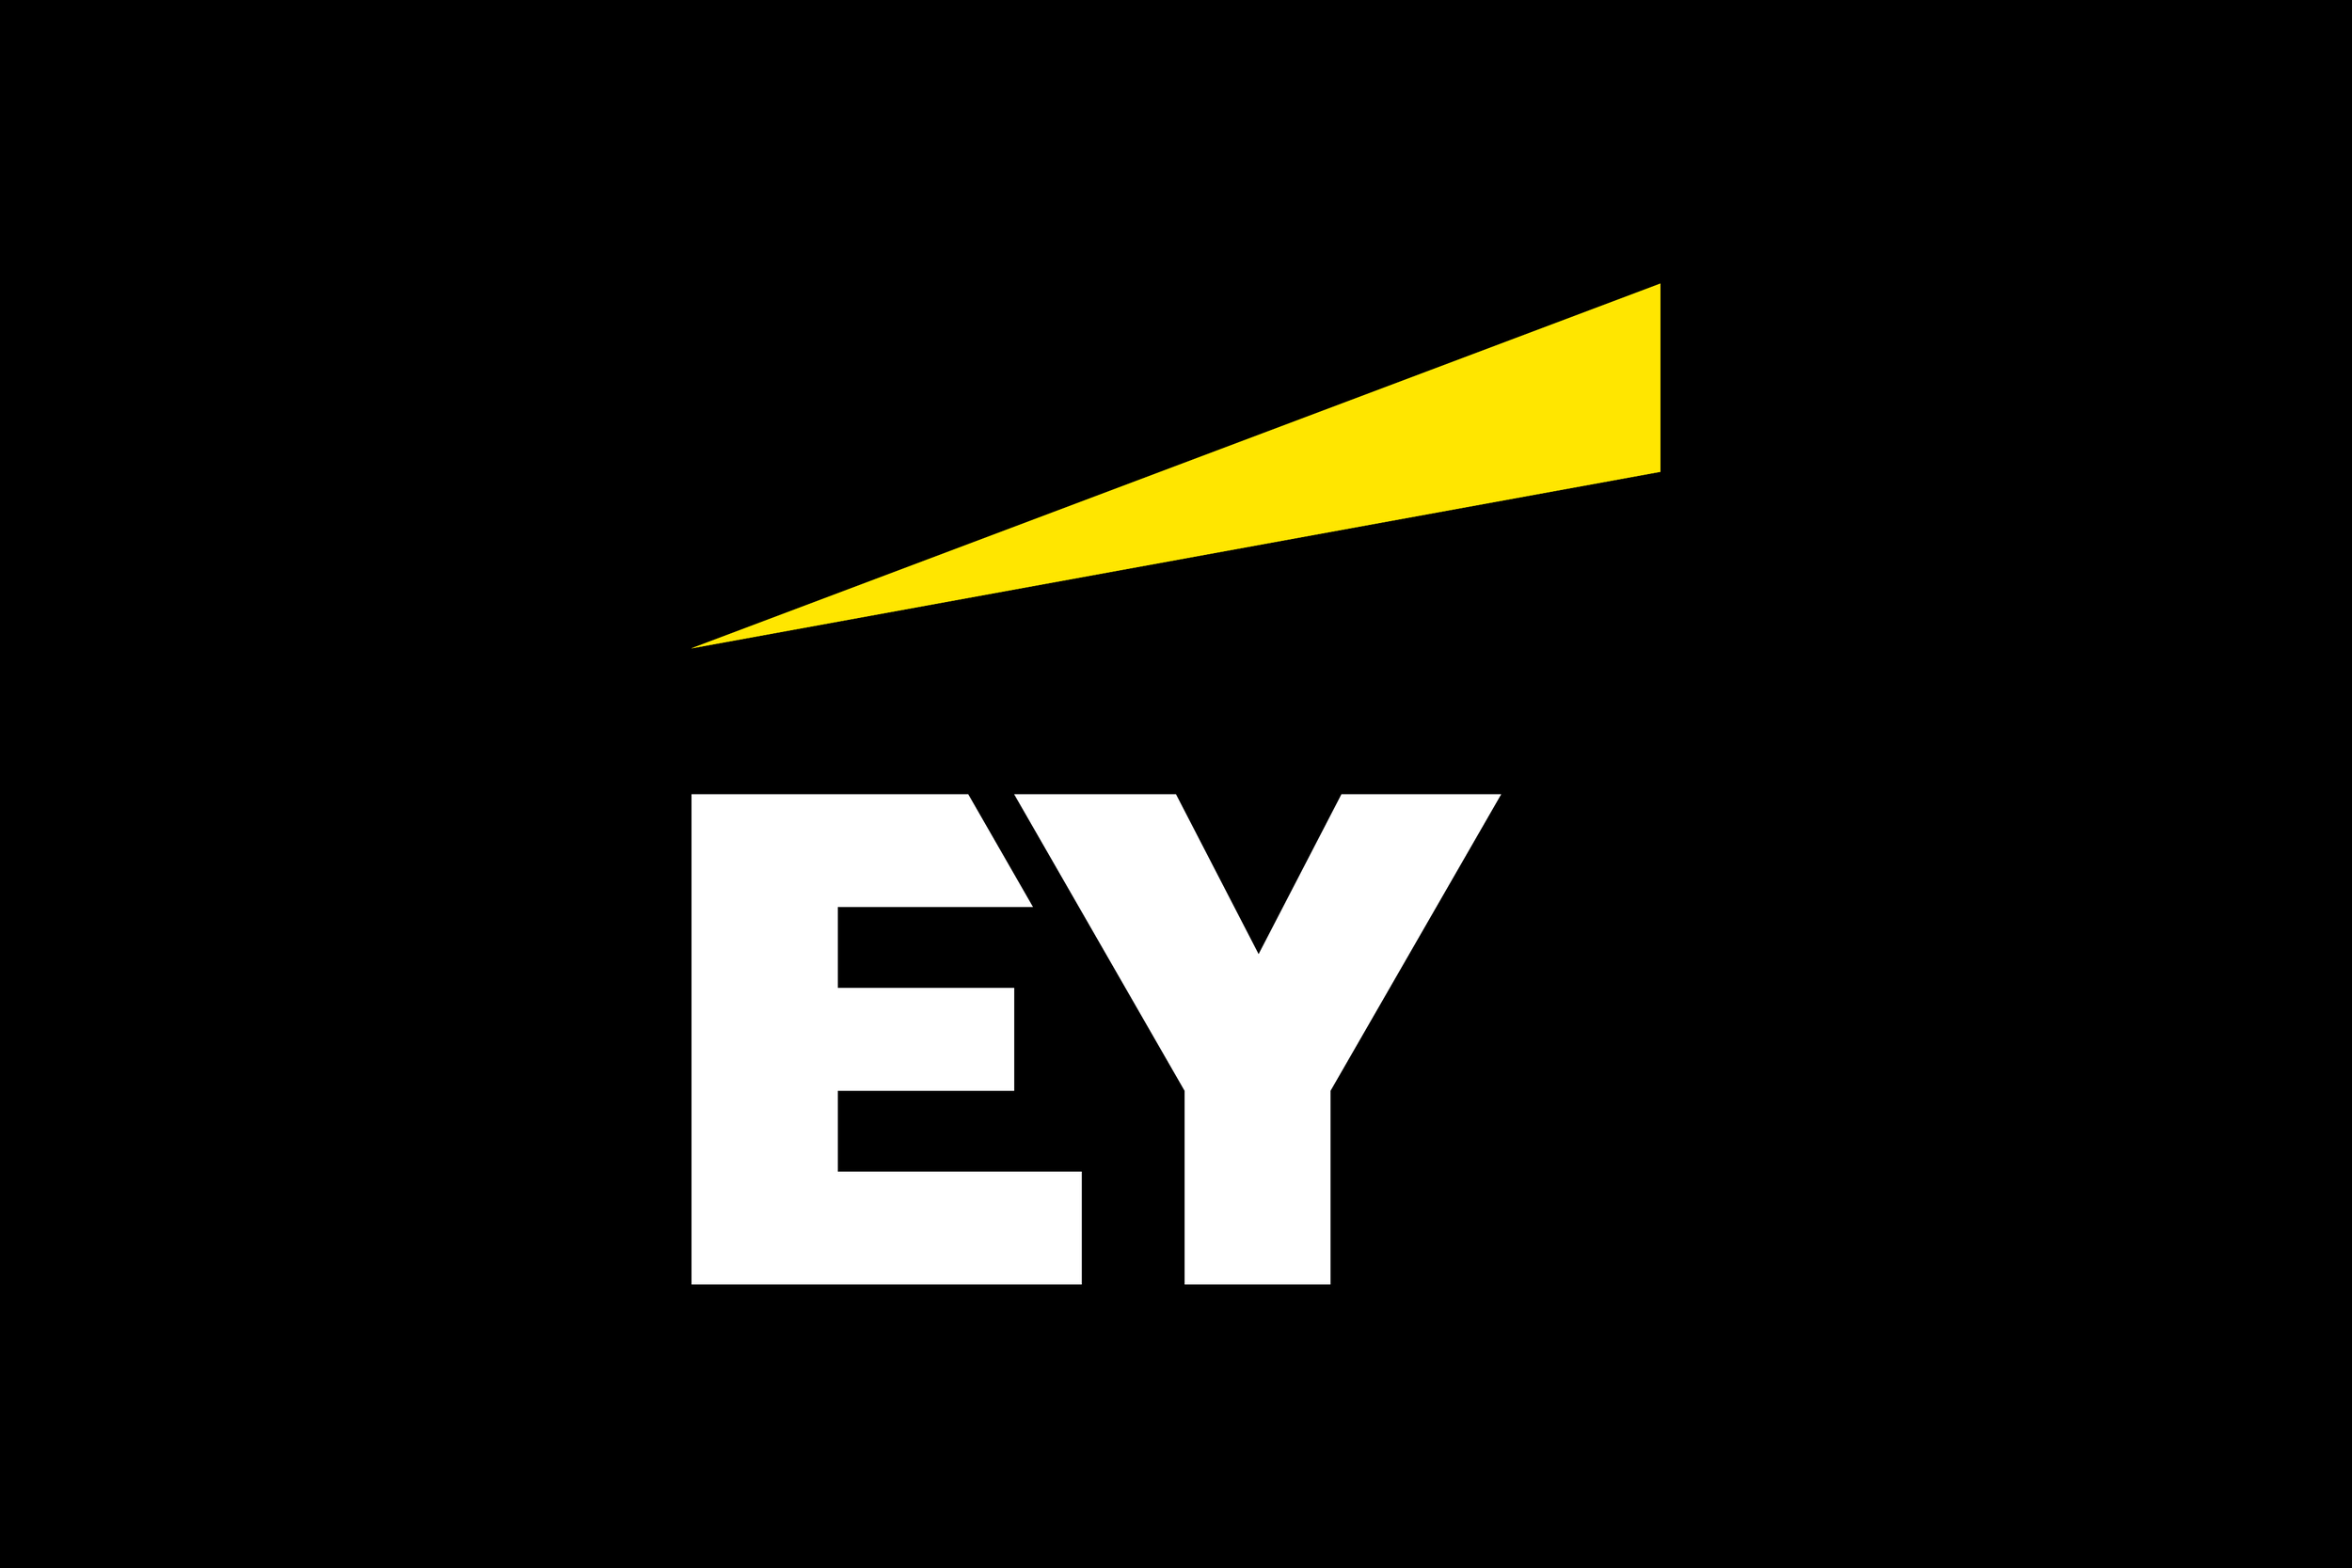 ey-logo-black.jpg